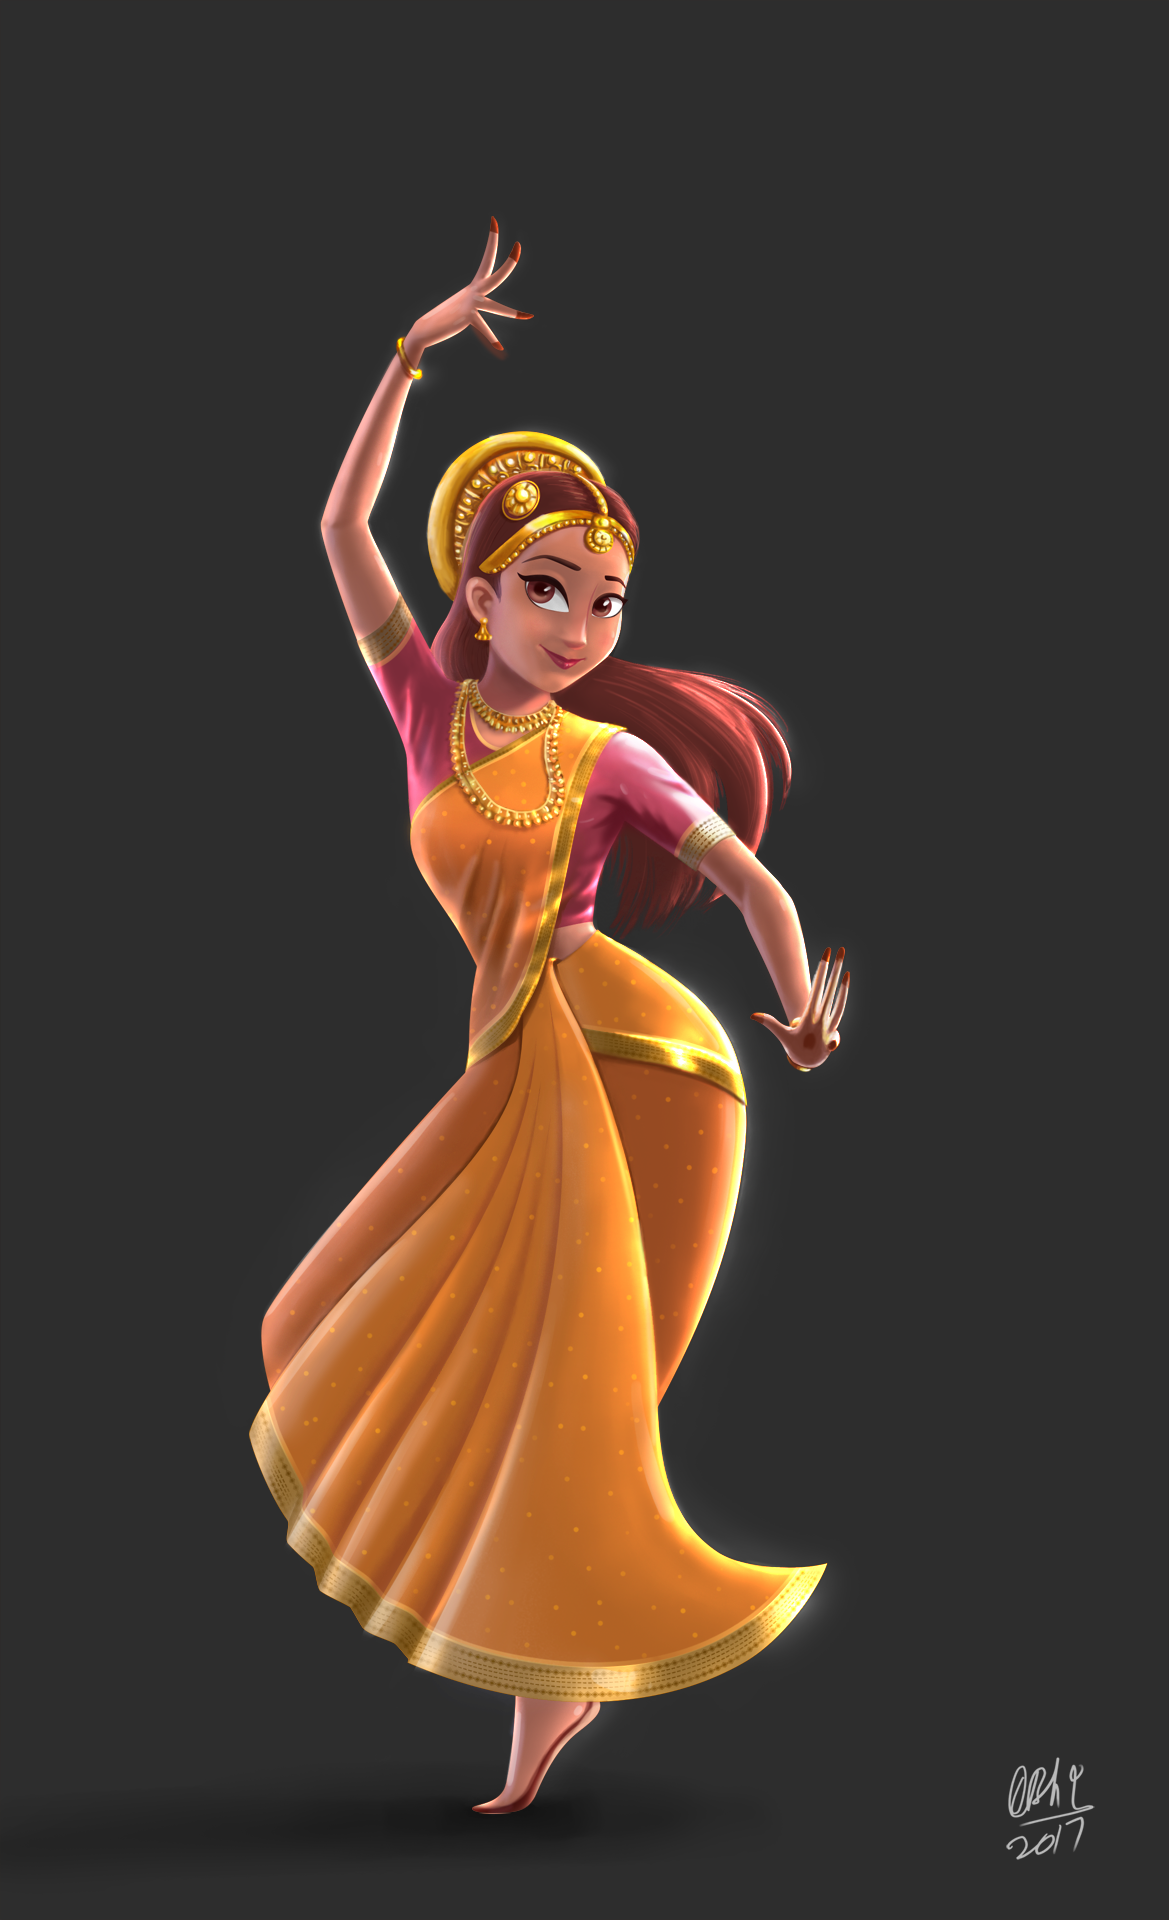 Digital Art  Character design  character design challenge indian dancer dancer girl character nepal indian India